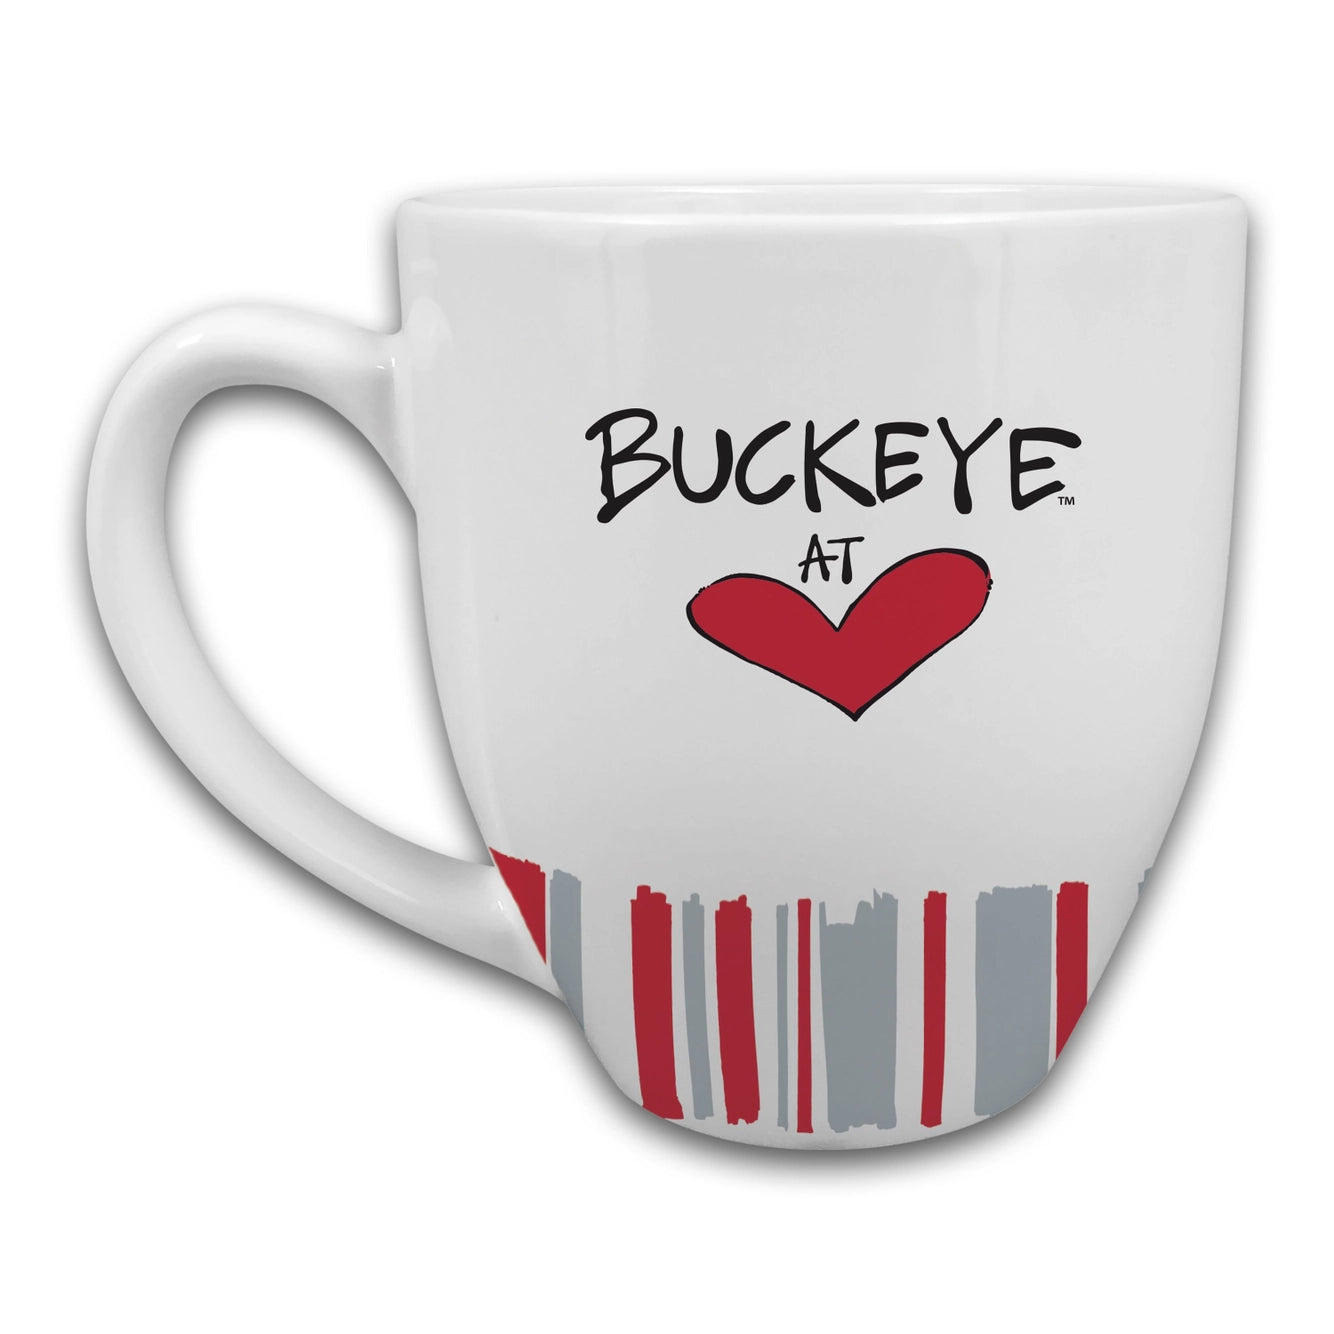 Buckeye at Heart Striped Mug